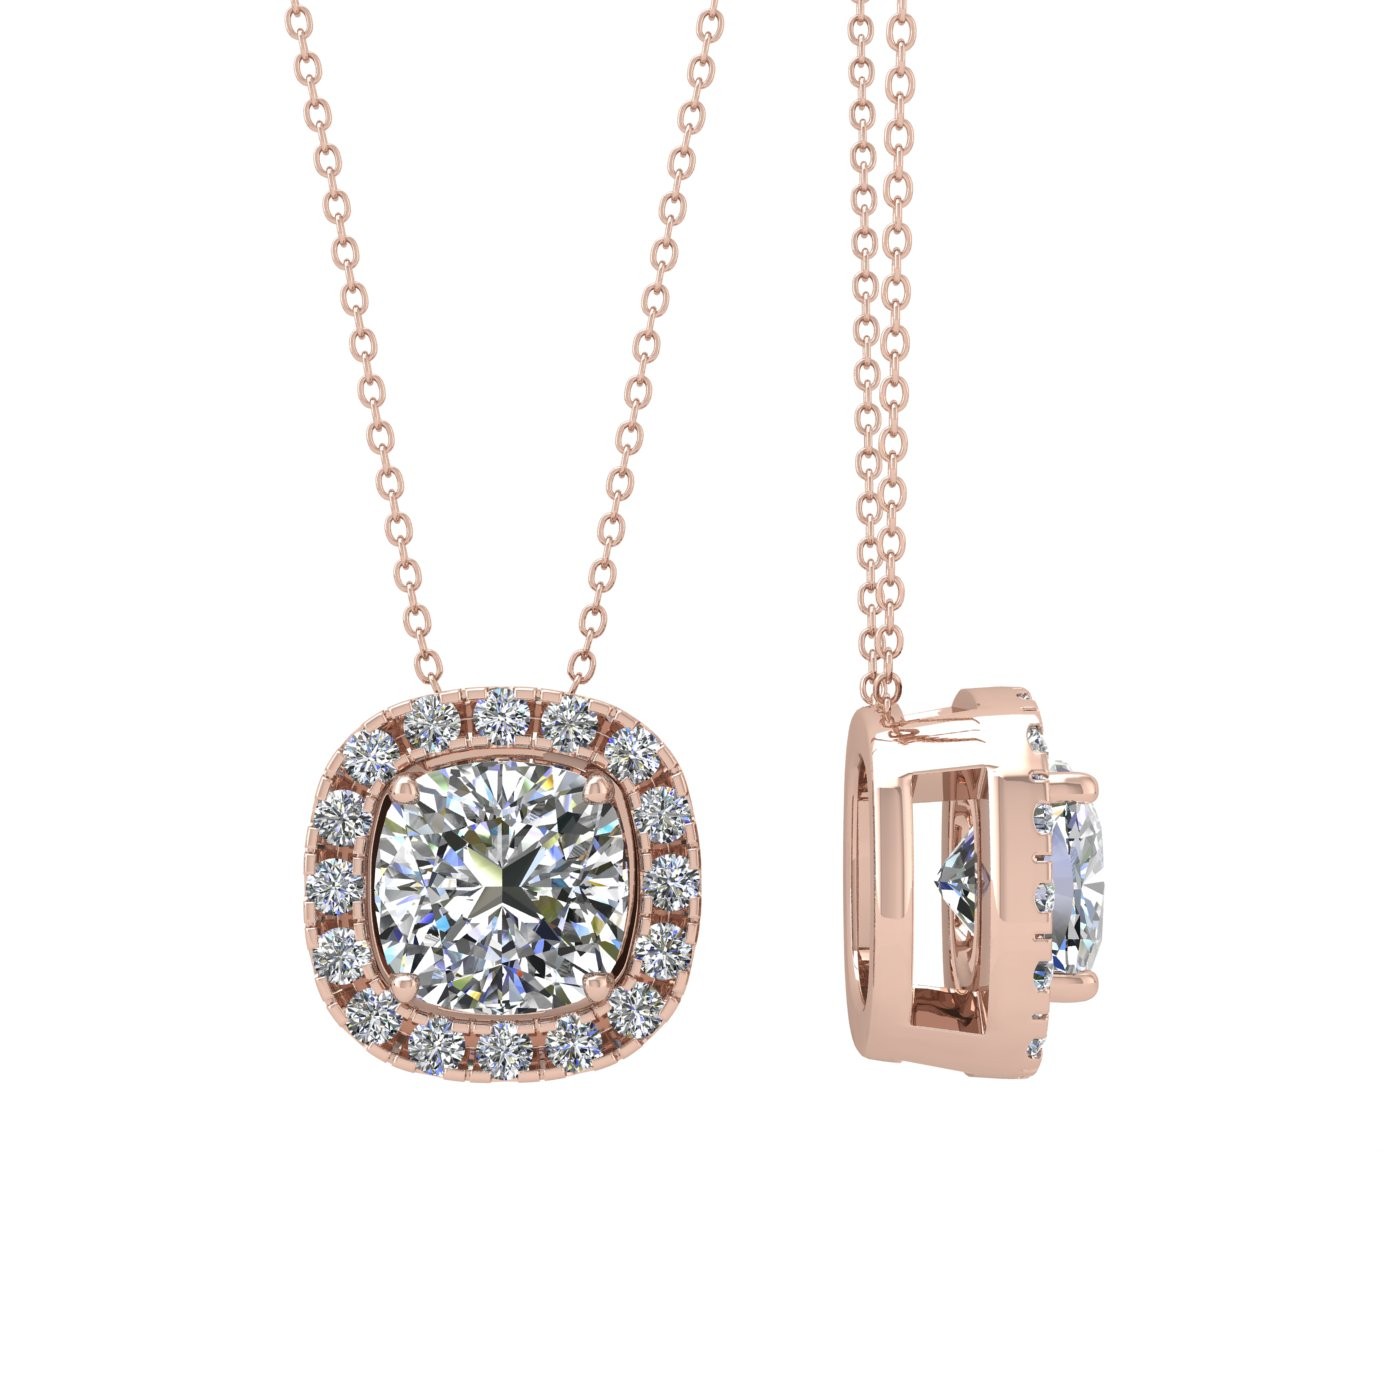 18k rose gold  2 ct 4 prongs cushion shape diamond pendant with diamond pavÉ set halo Photos & images